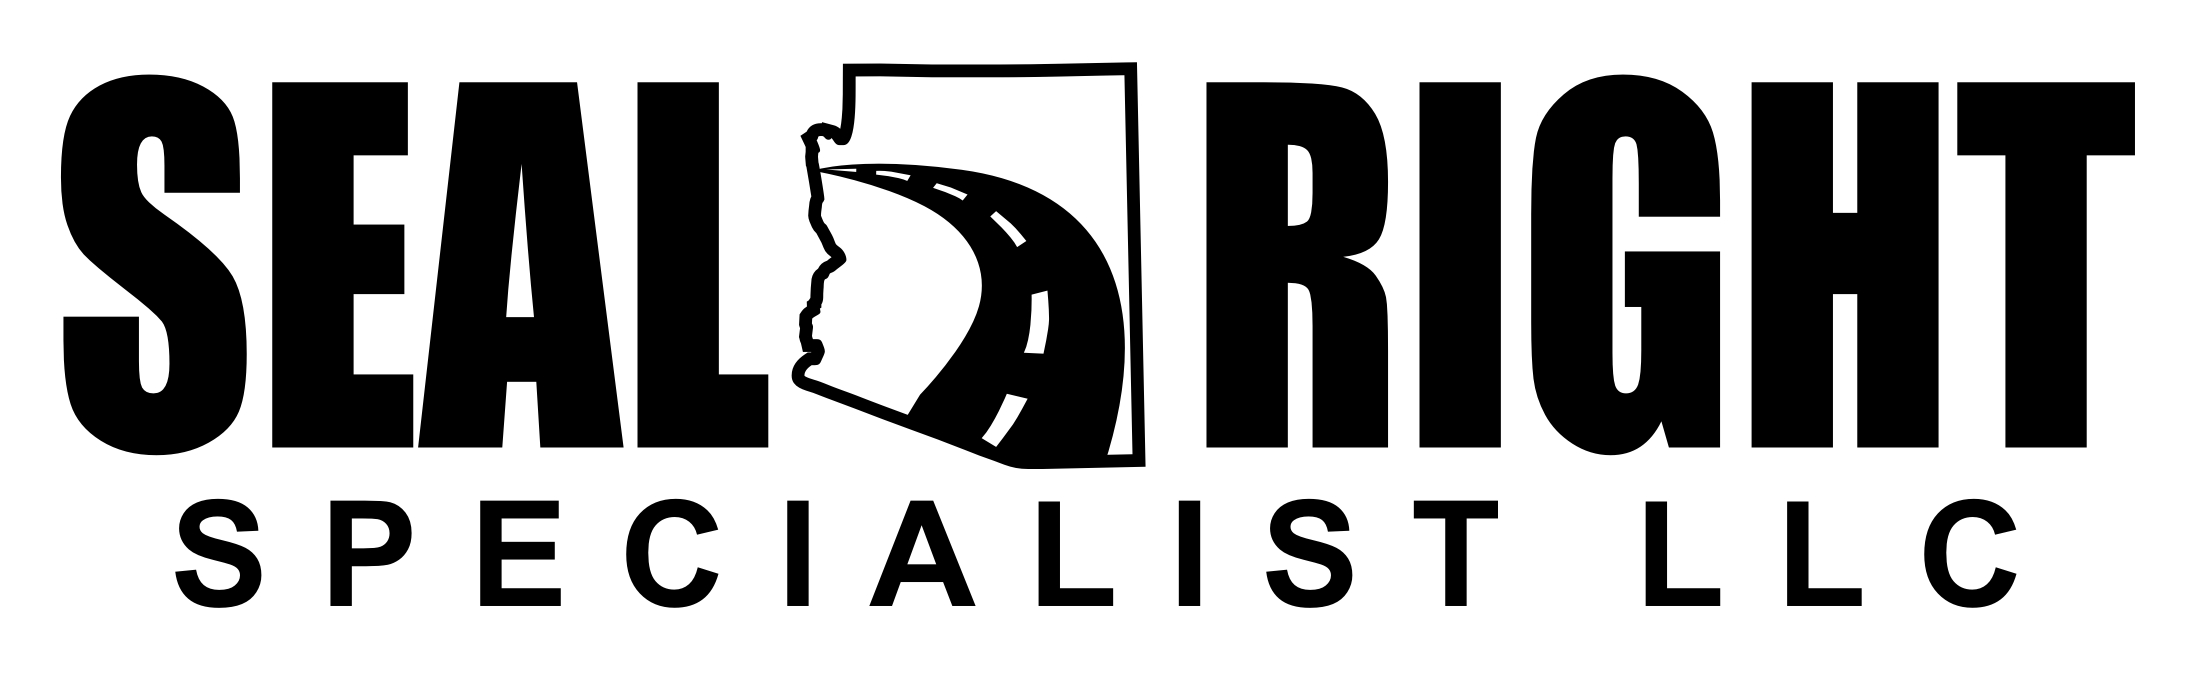 Seal Right Specialist Logo